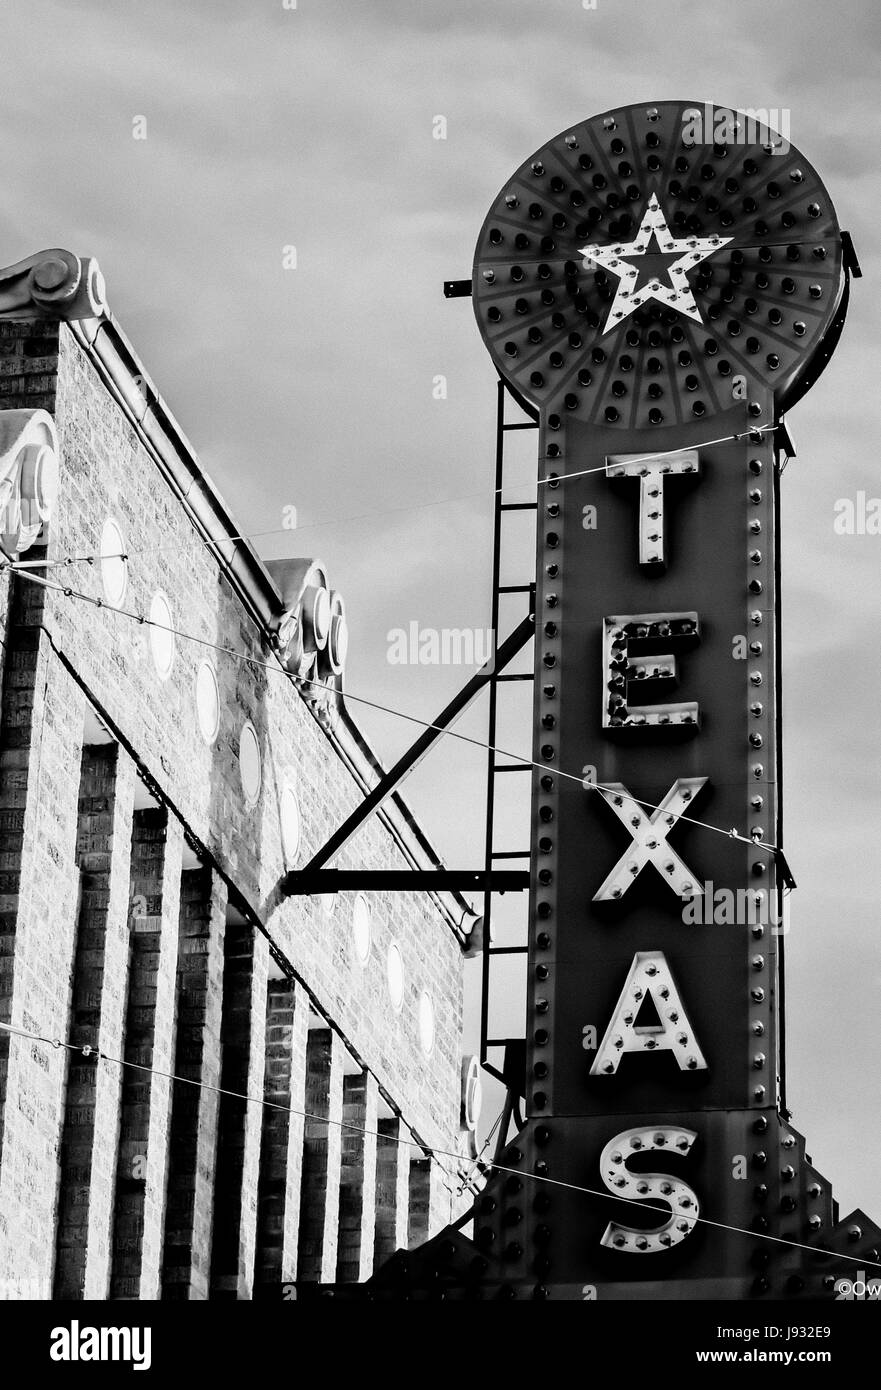 Texas Theater Foto Stock